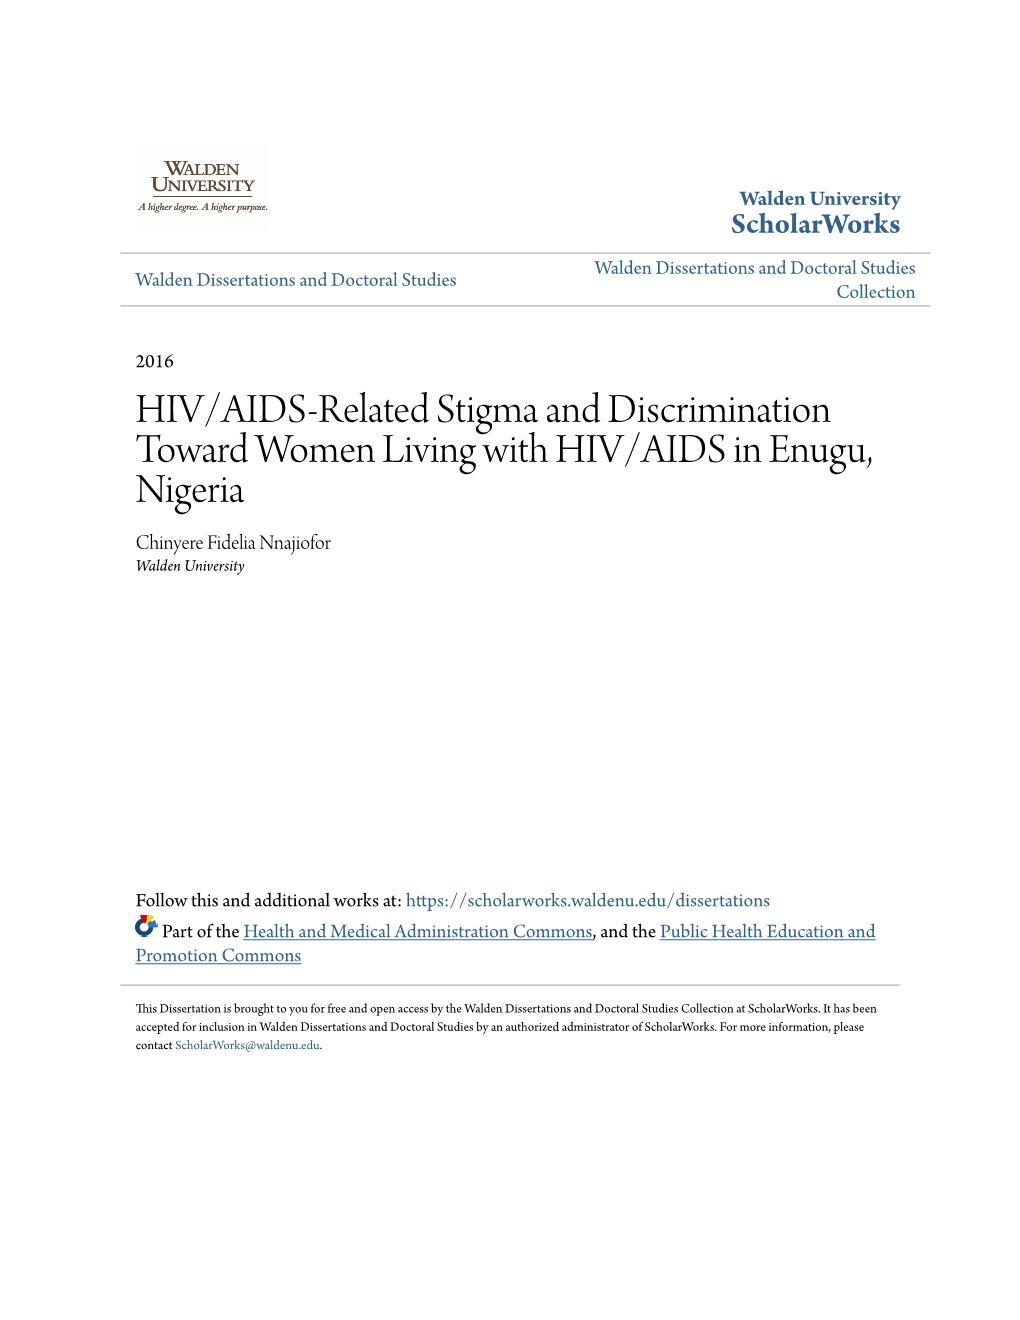 HIV/AIDS-Related Stigma and Discrimination Toward Women Living with HIV/AIDS in Enugu, Nigeria Chinyere Fidelia Nnajiofor Walden University